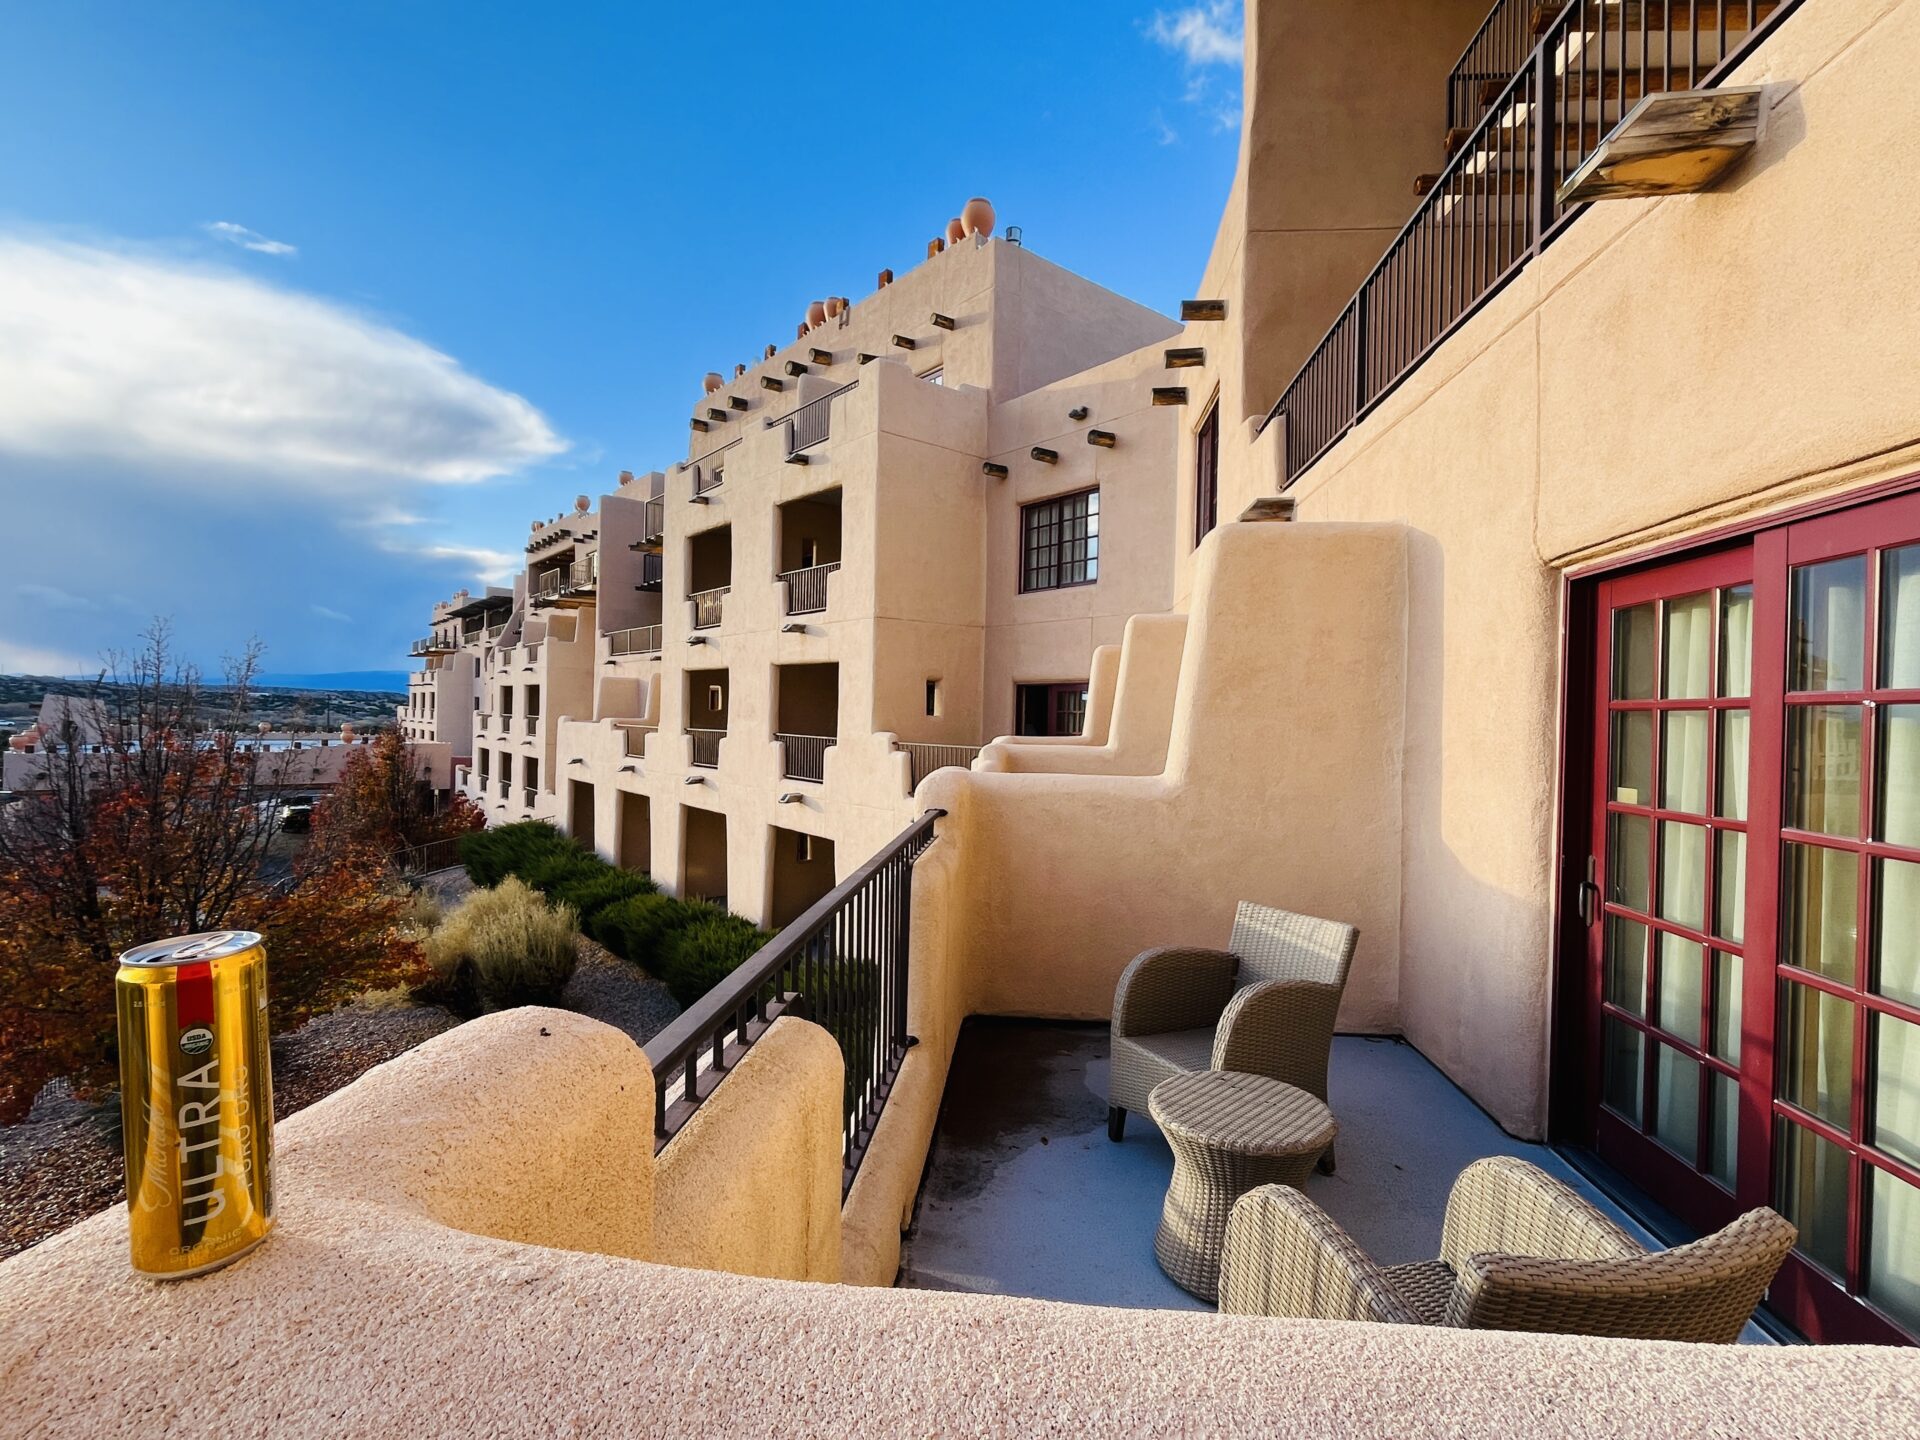 Review: Diamond Upgrade and Benefits at Hilton Santa Fe Buffalo Thunder Resort in New Mexico